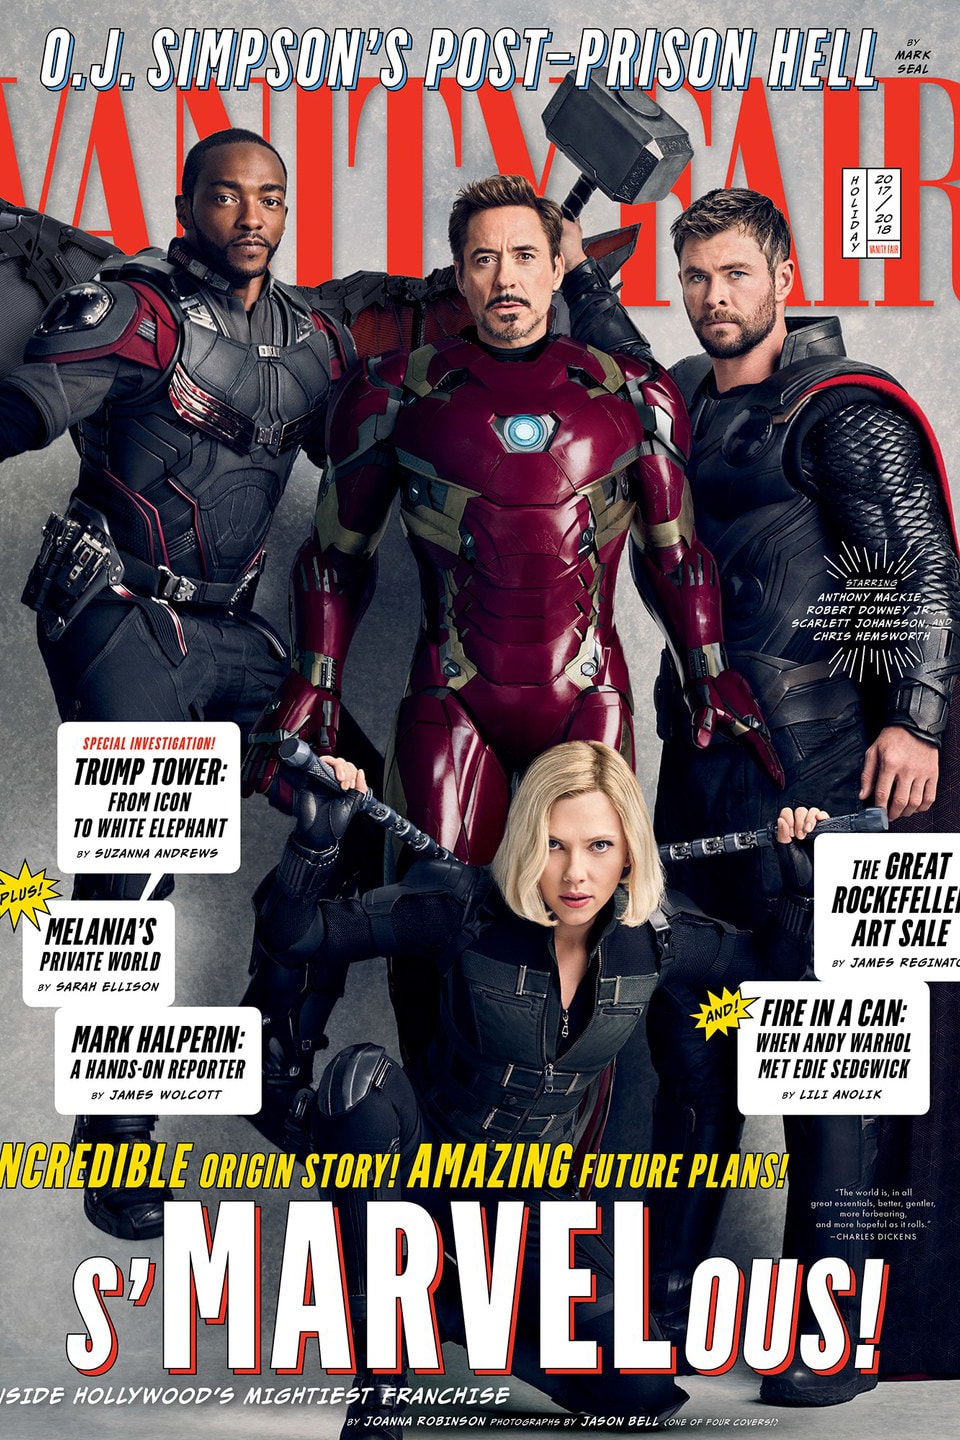 《Avengers: Infinity War》演員集體登上《Vanity Fair》雜誌封面